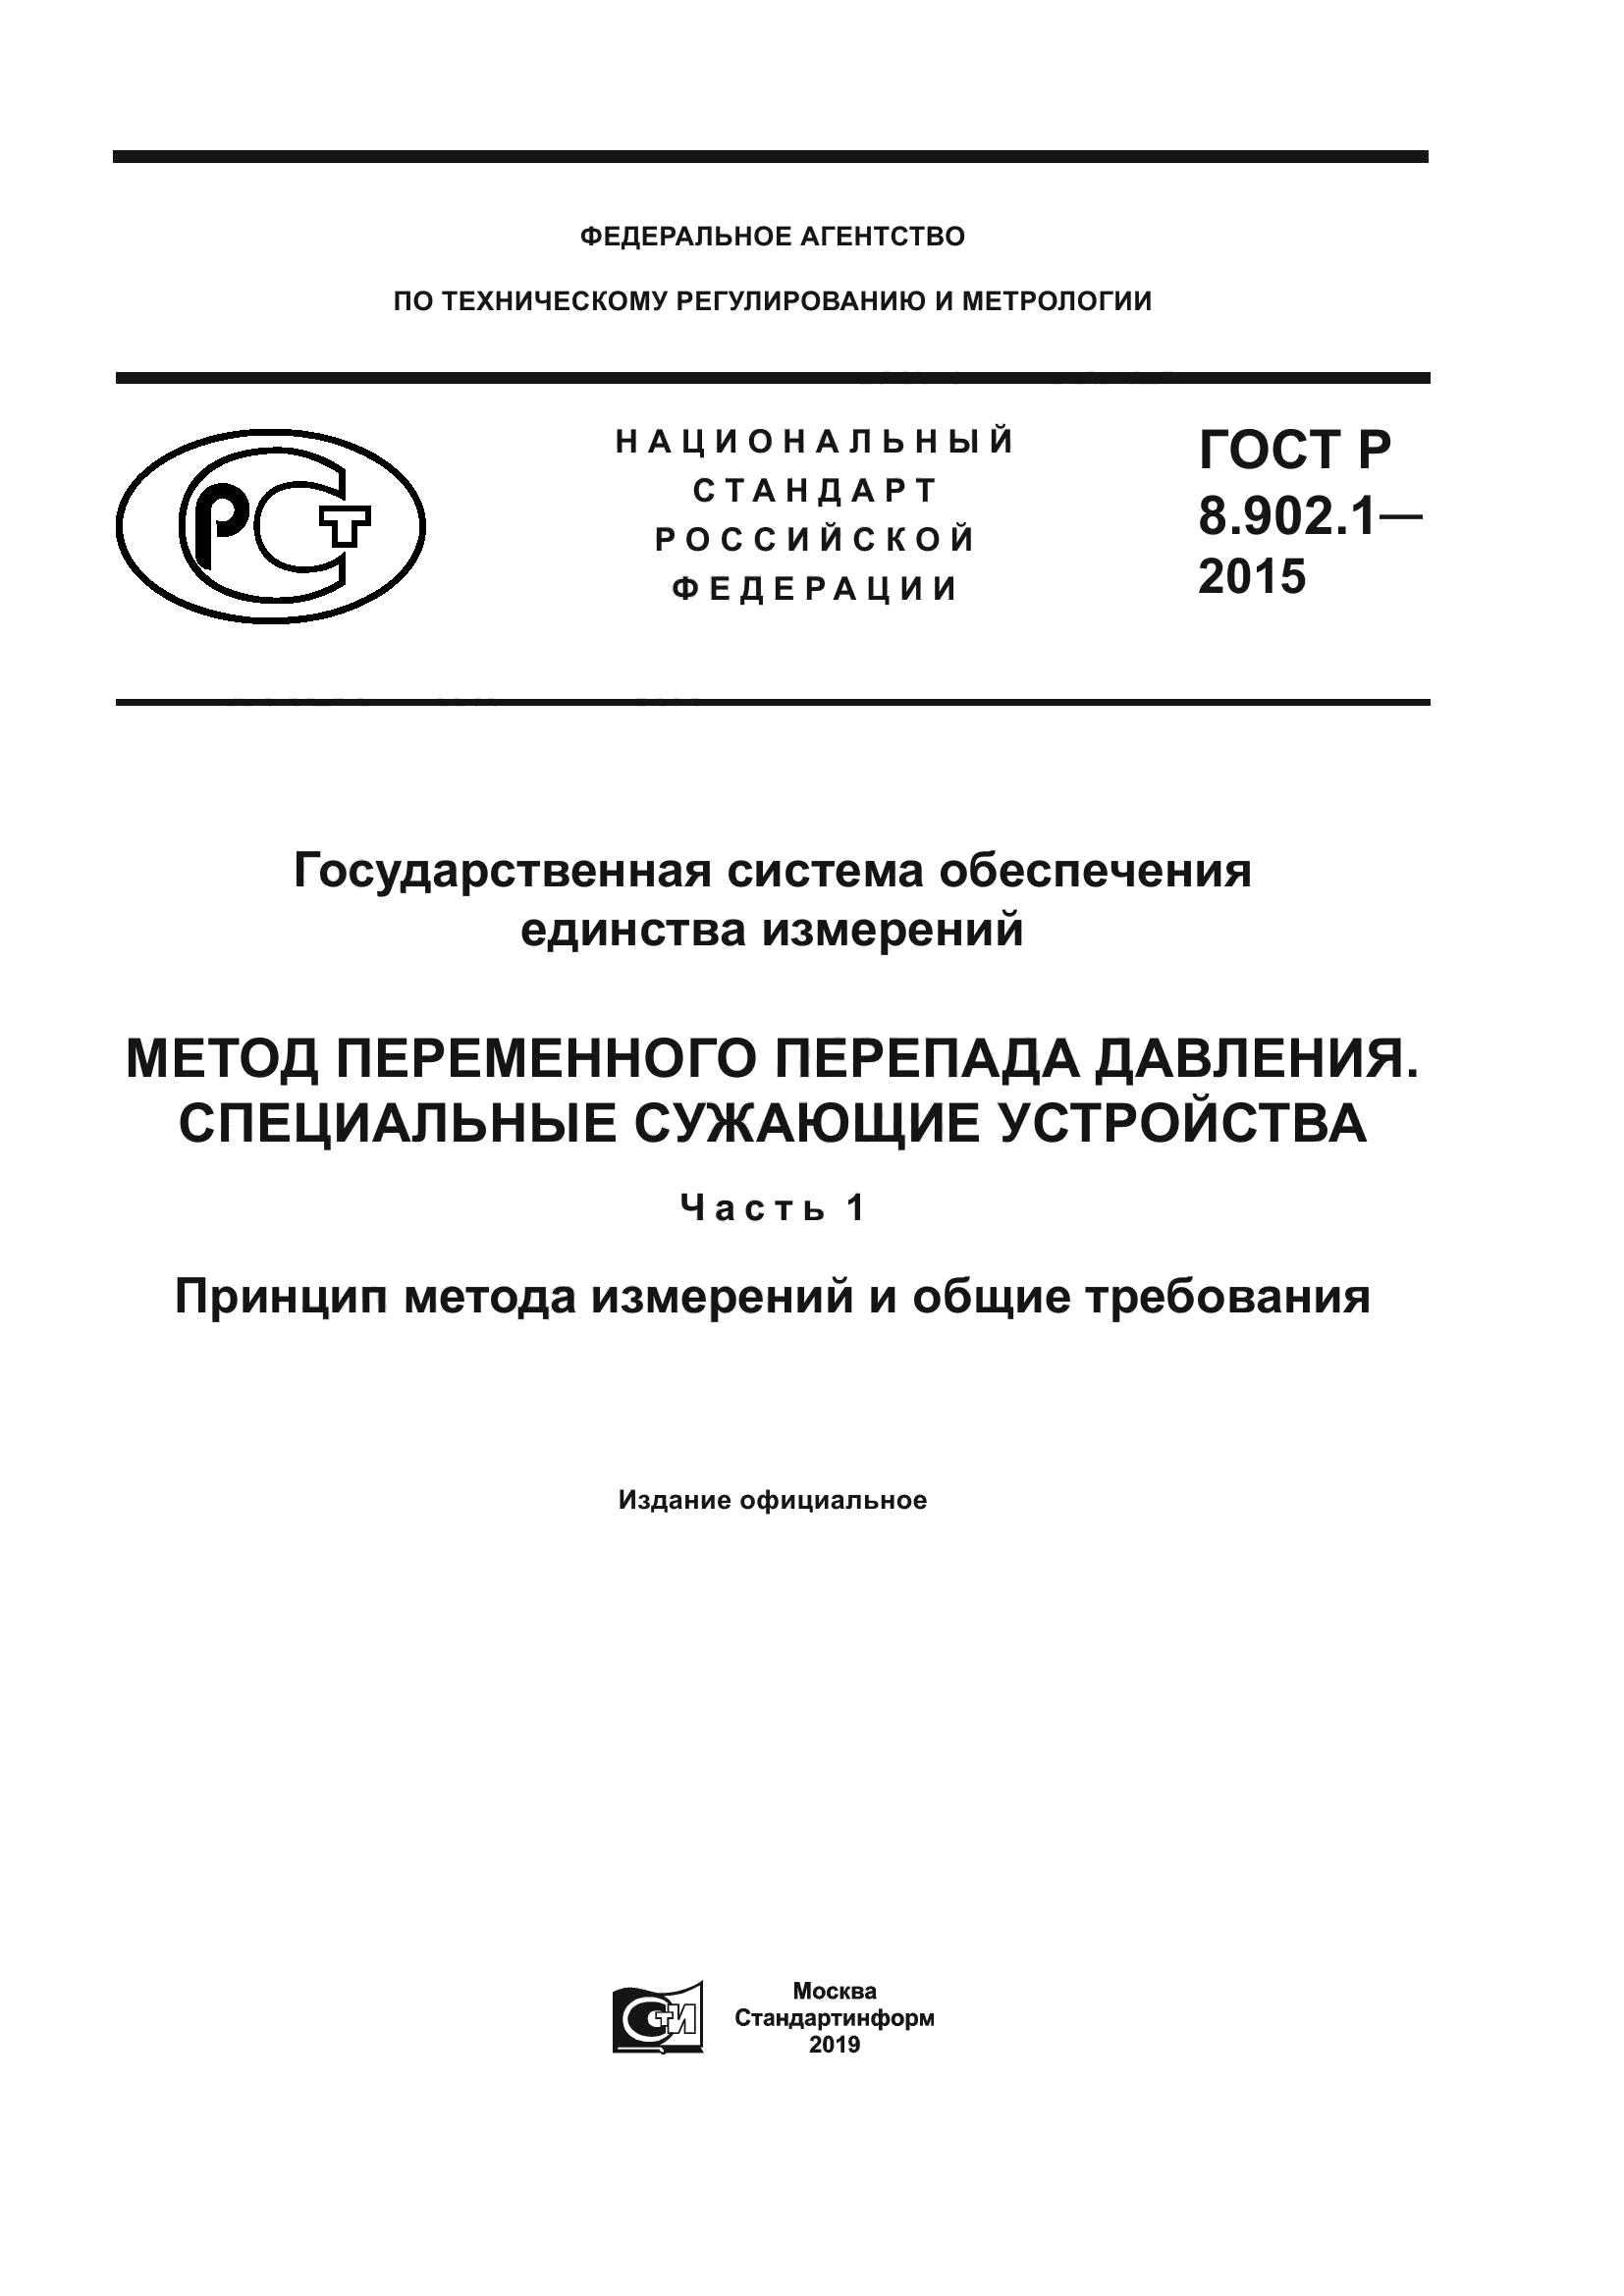 ГОСТ Р 8.902.1-2015